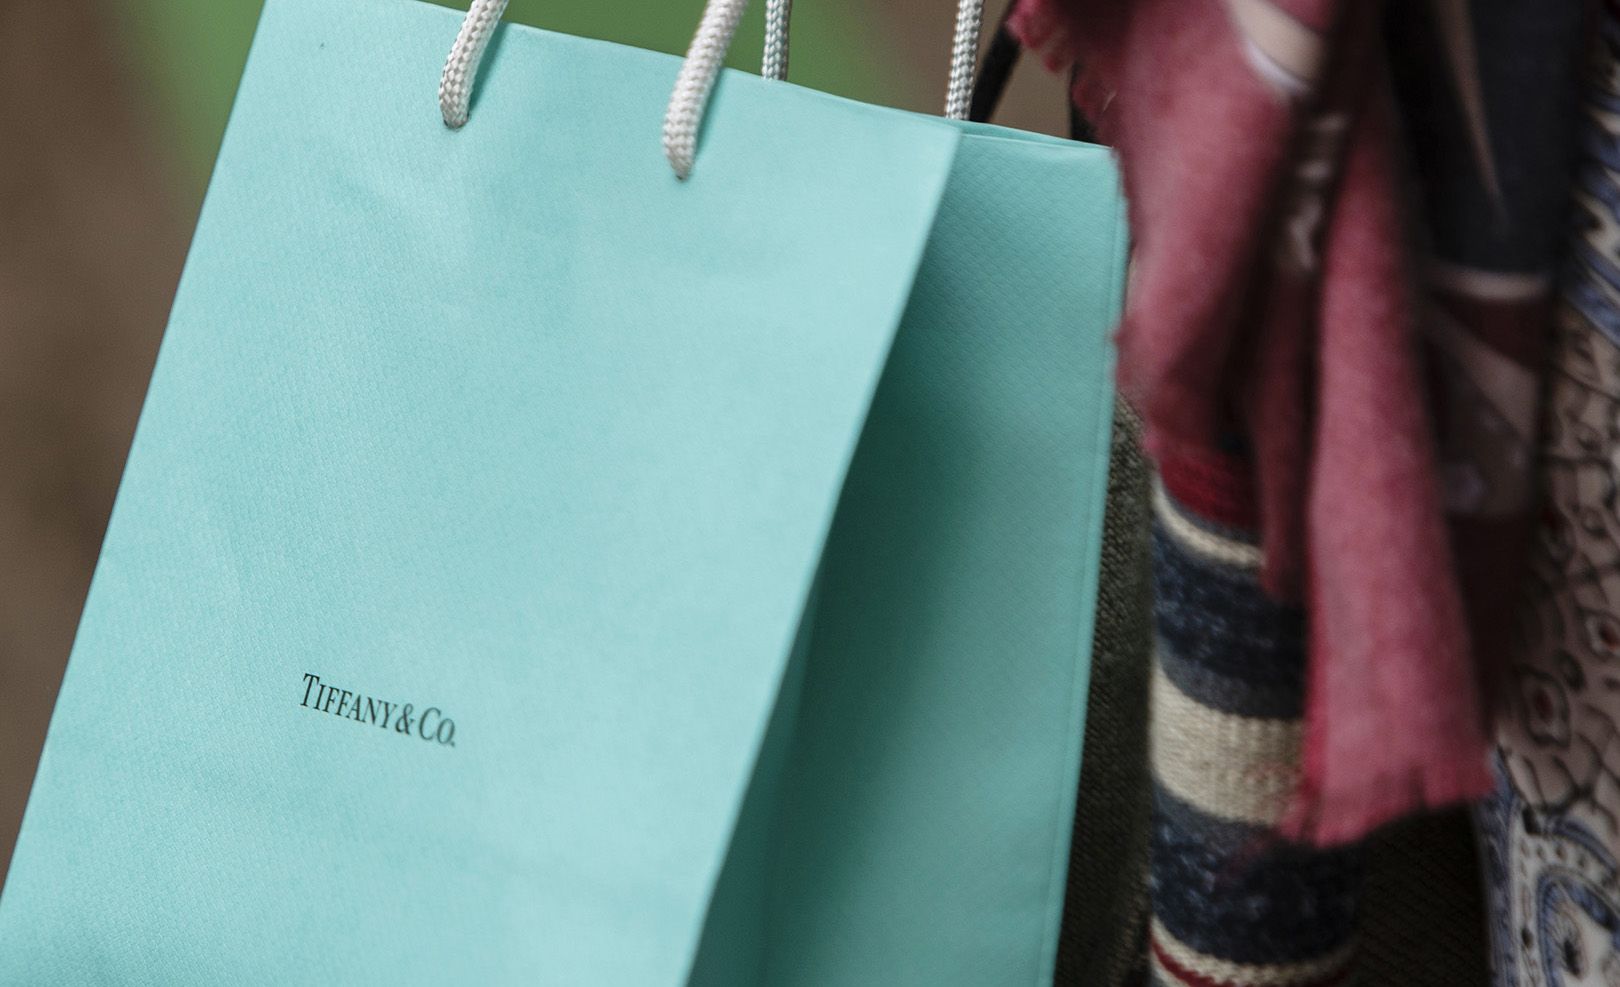 Louis Vuitton Owner Bid $14.5 Billion for Tiffany